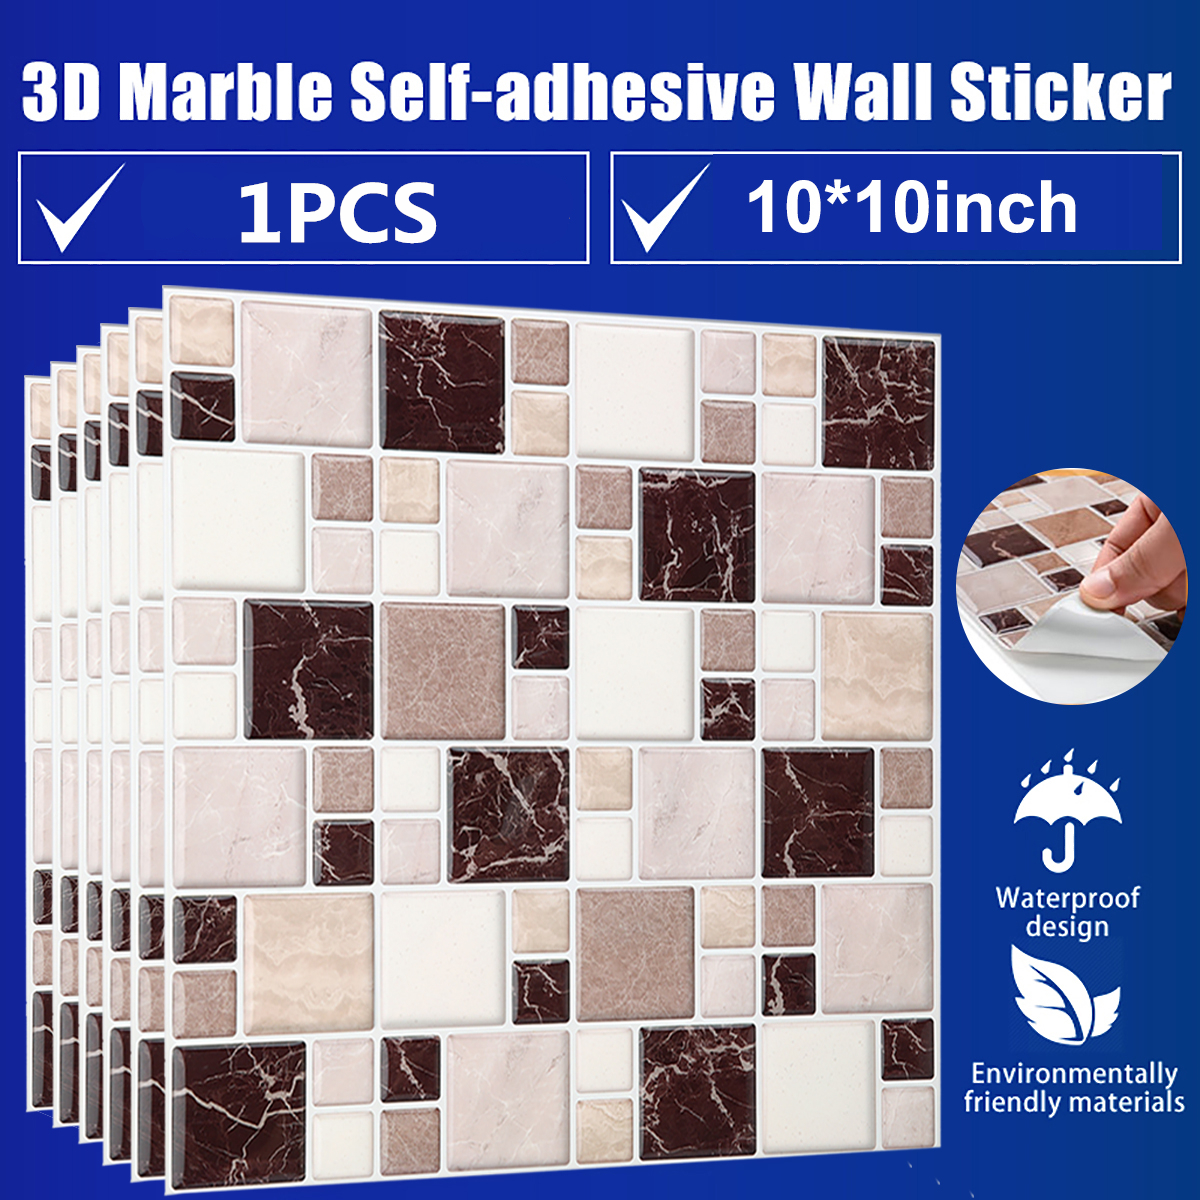 1PC-Brown-Brick-Wall-Stickers-Self-adhesive-Tile-Sticker-Bathroom-Kitchen-Decoration-1823173-1